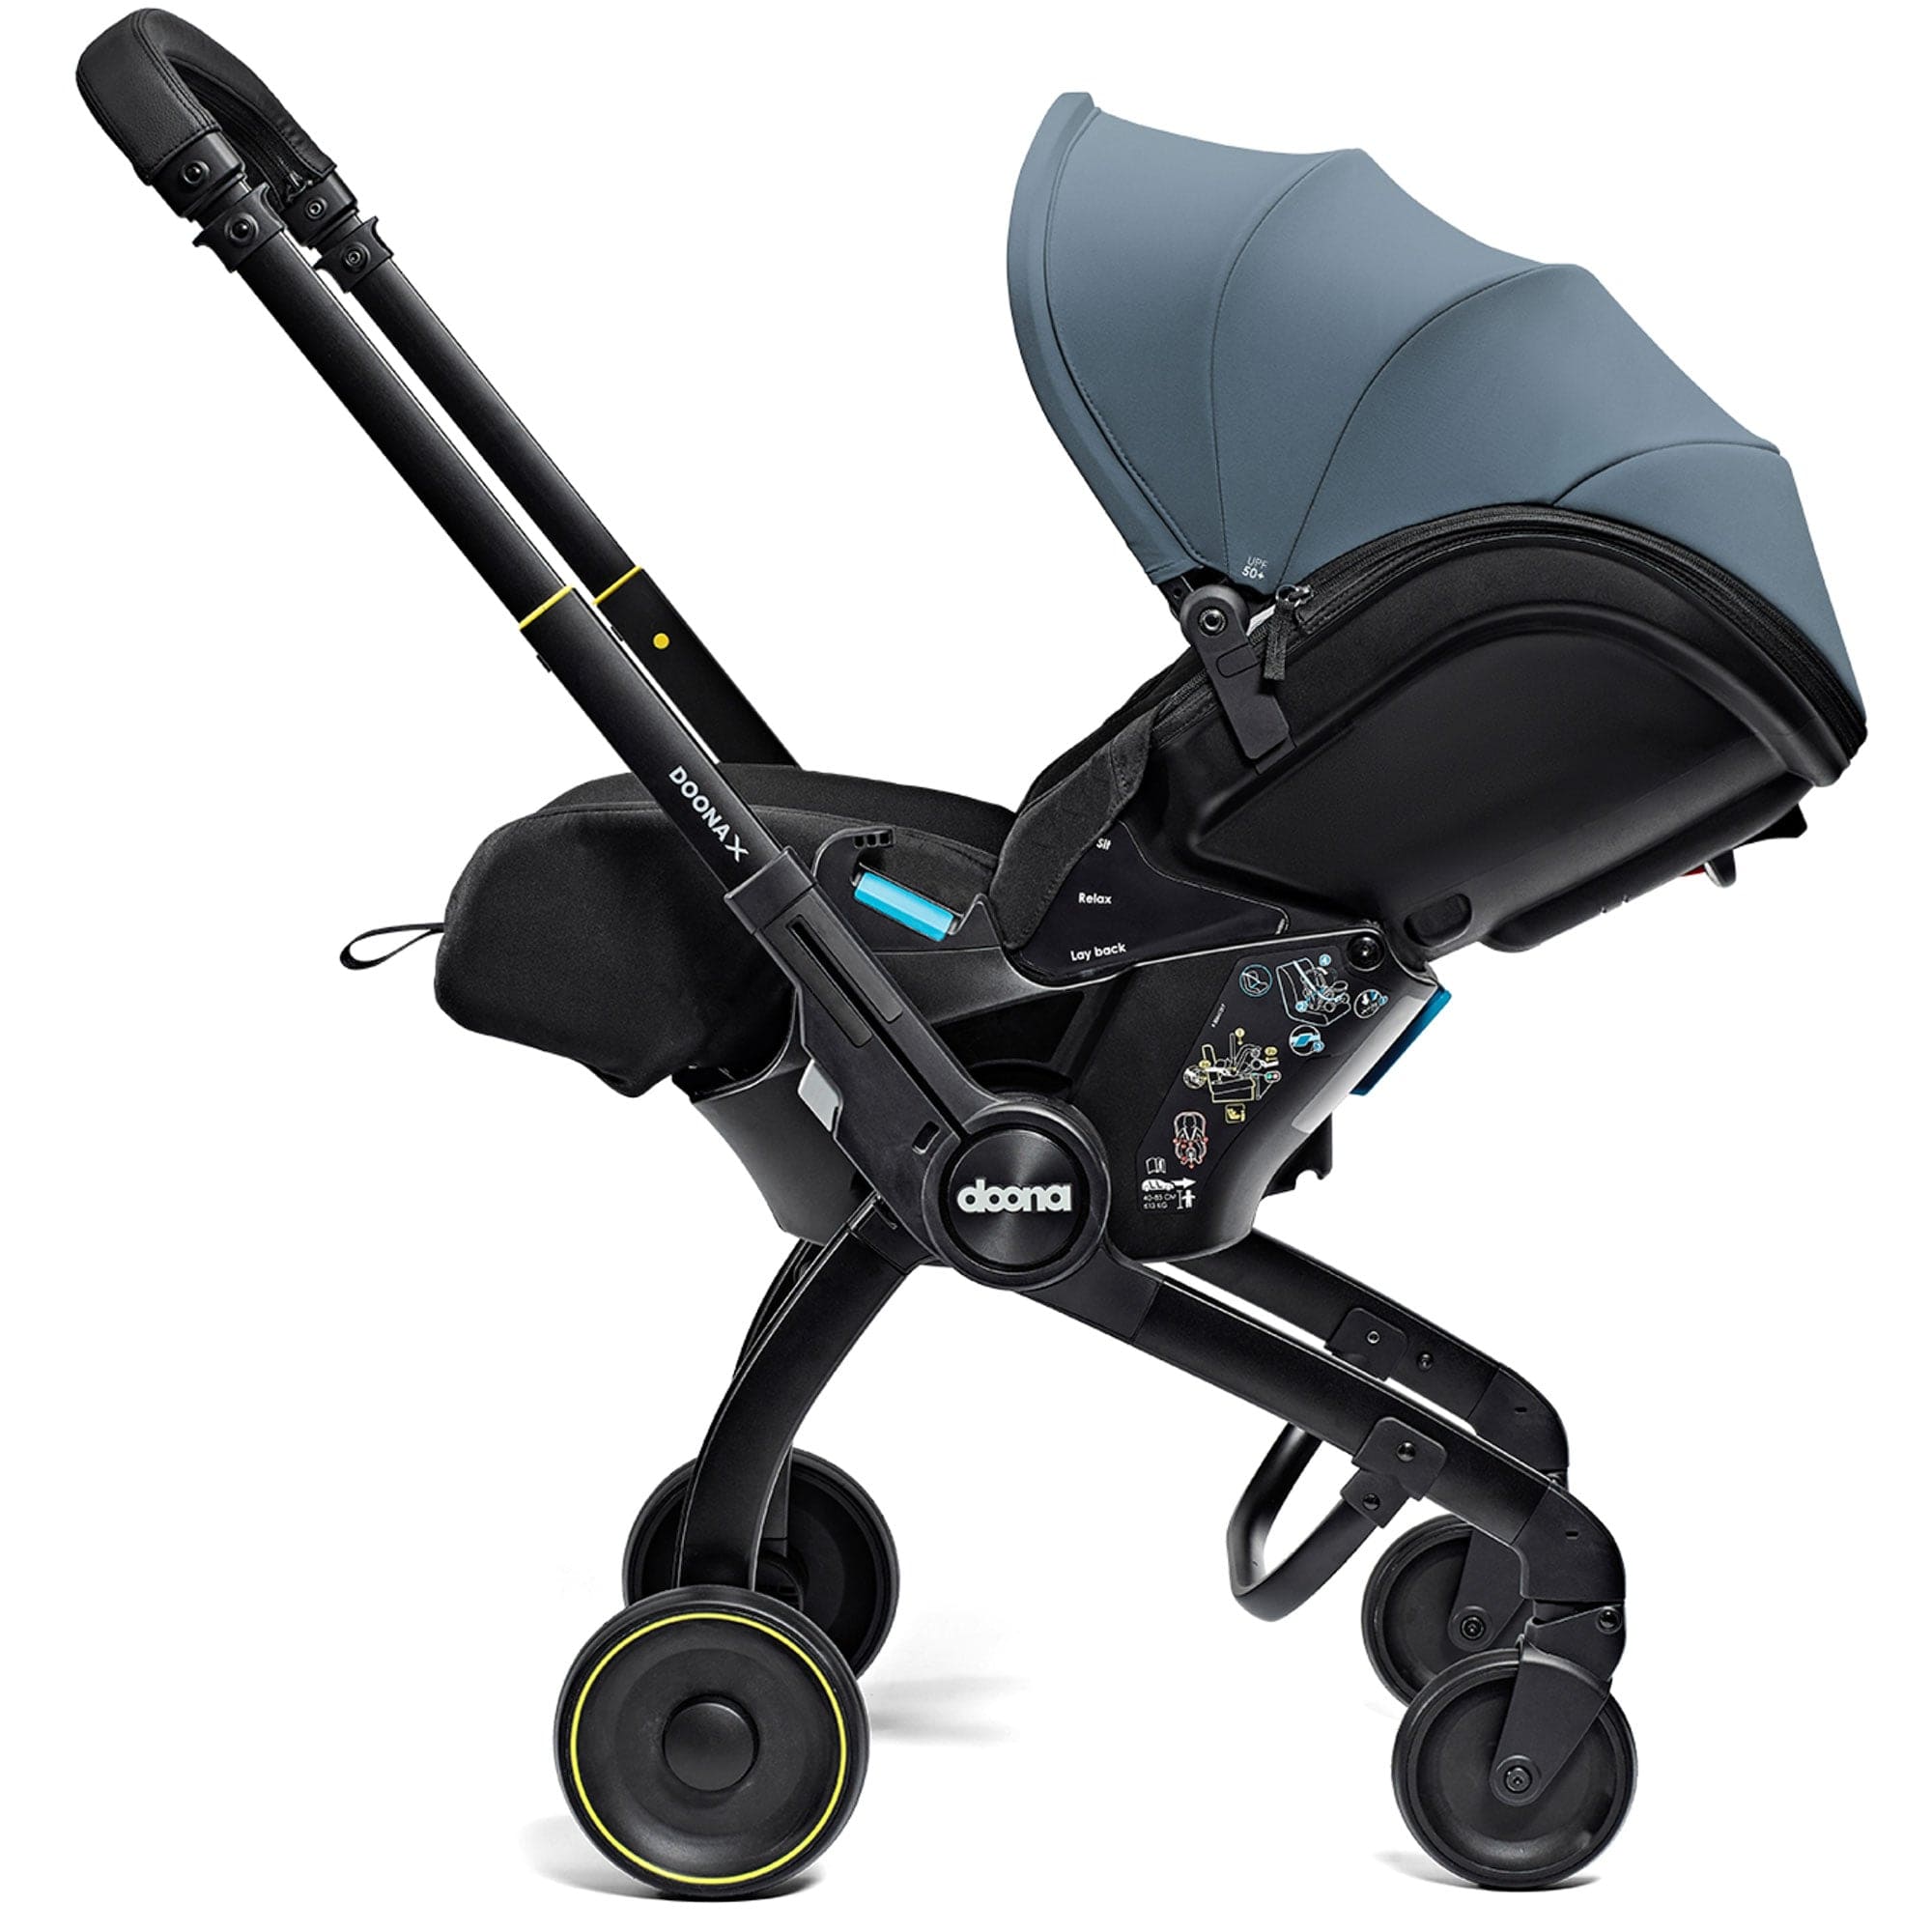 Doona baby car seats Doona X Infant Car Seat Stroller and X Isofix Base (Ocean Blue) 14570-OCE-BLU